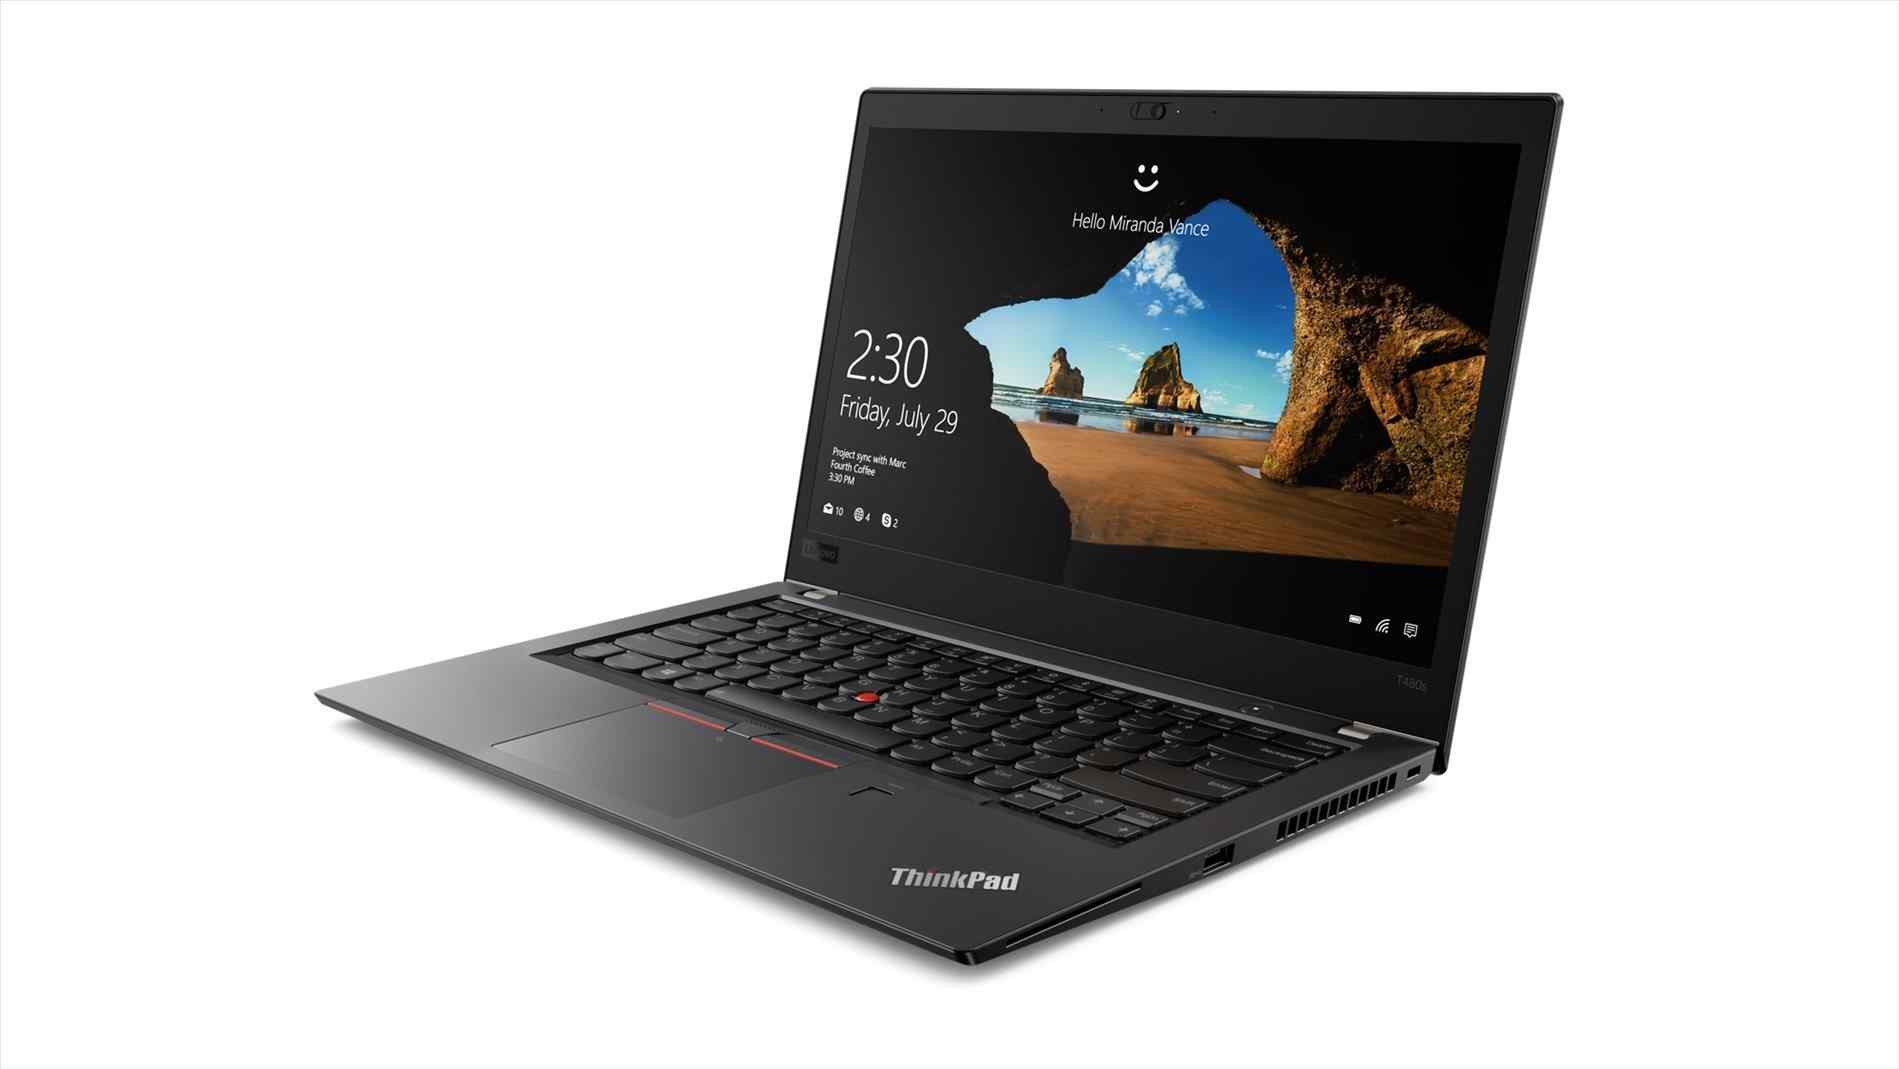 Lenovo ThinkPad X280 Series - Notebookcheck.net External Reviews